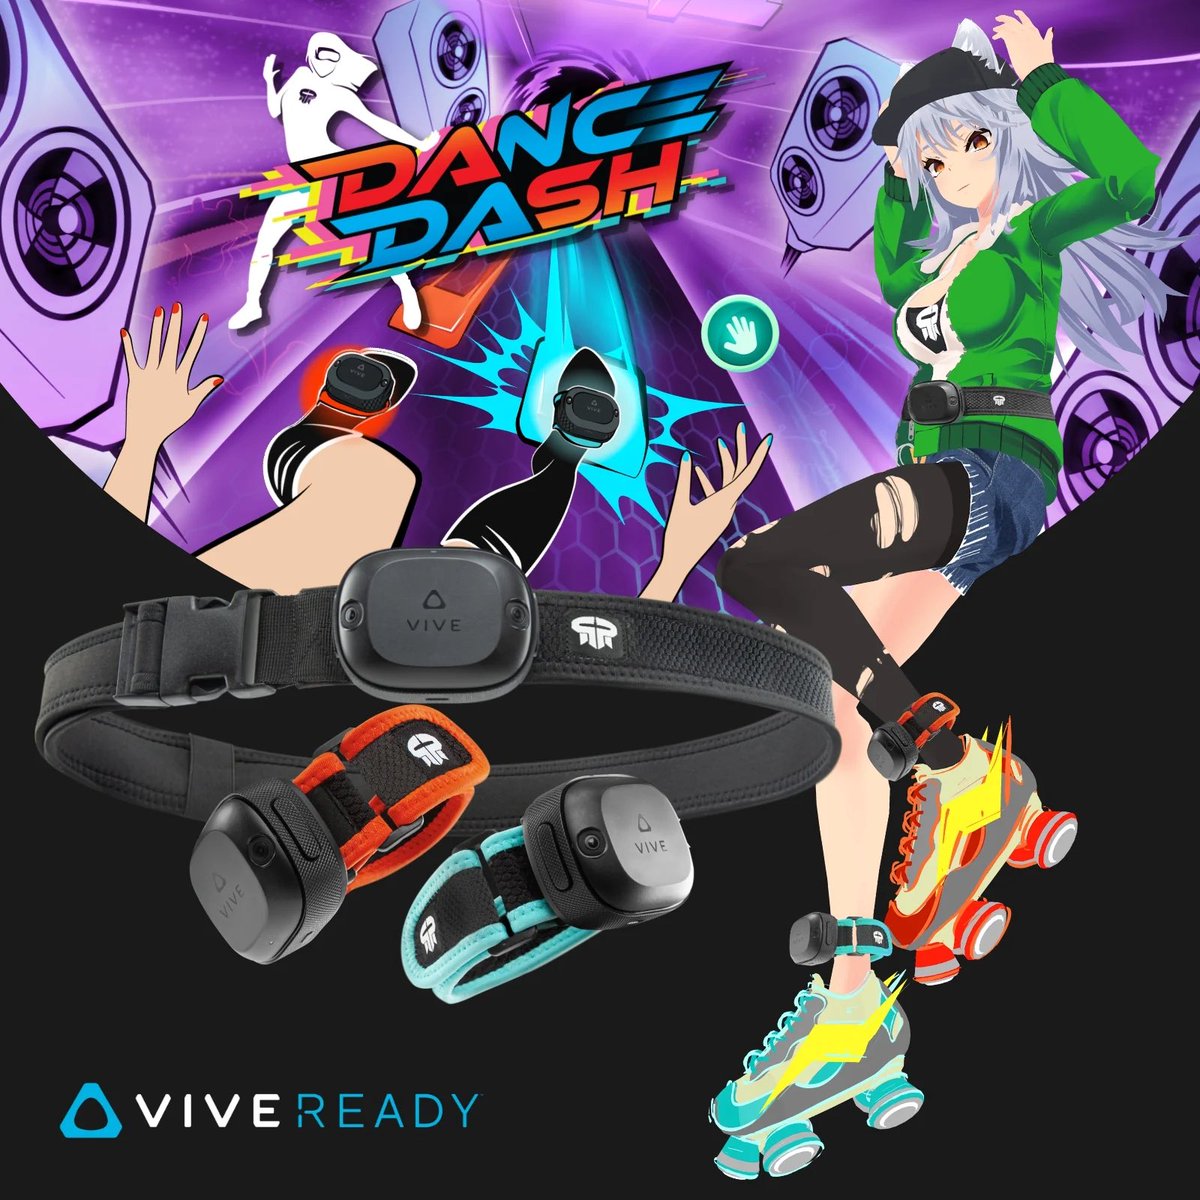 VIVE Ultimate Tracker 3 + 1 Kit available now on vive.com including Trackstraps + Dance Dash Game Key! #VIVEUltimateTracker #DanceDash #FullBodyTracking